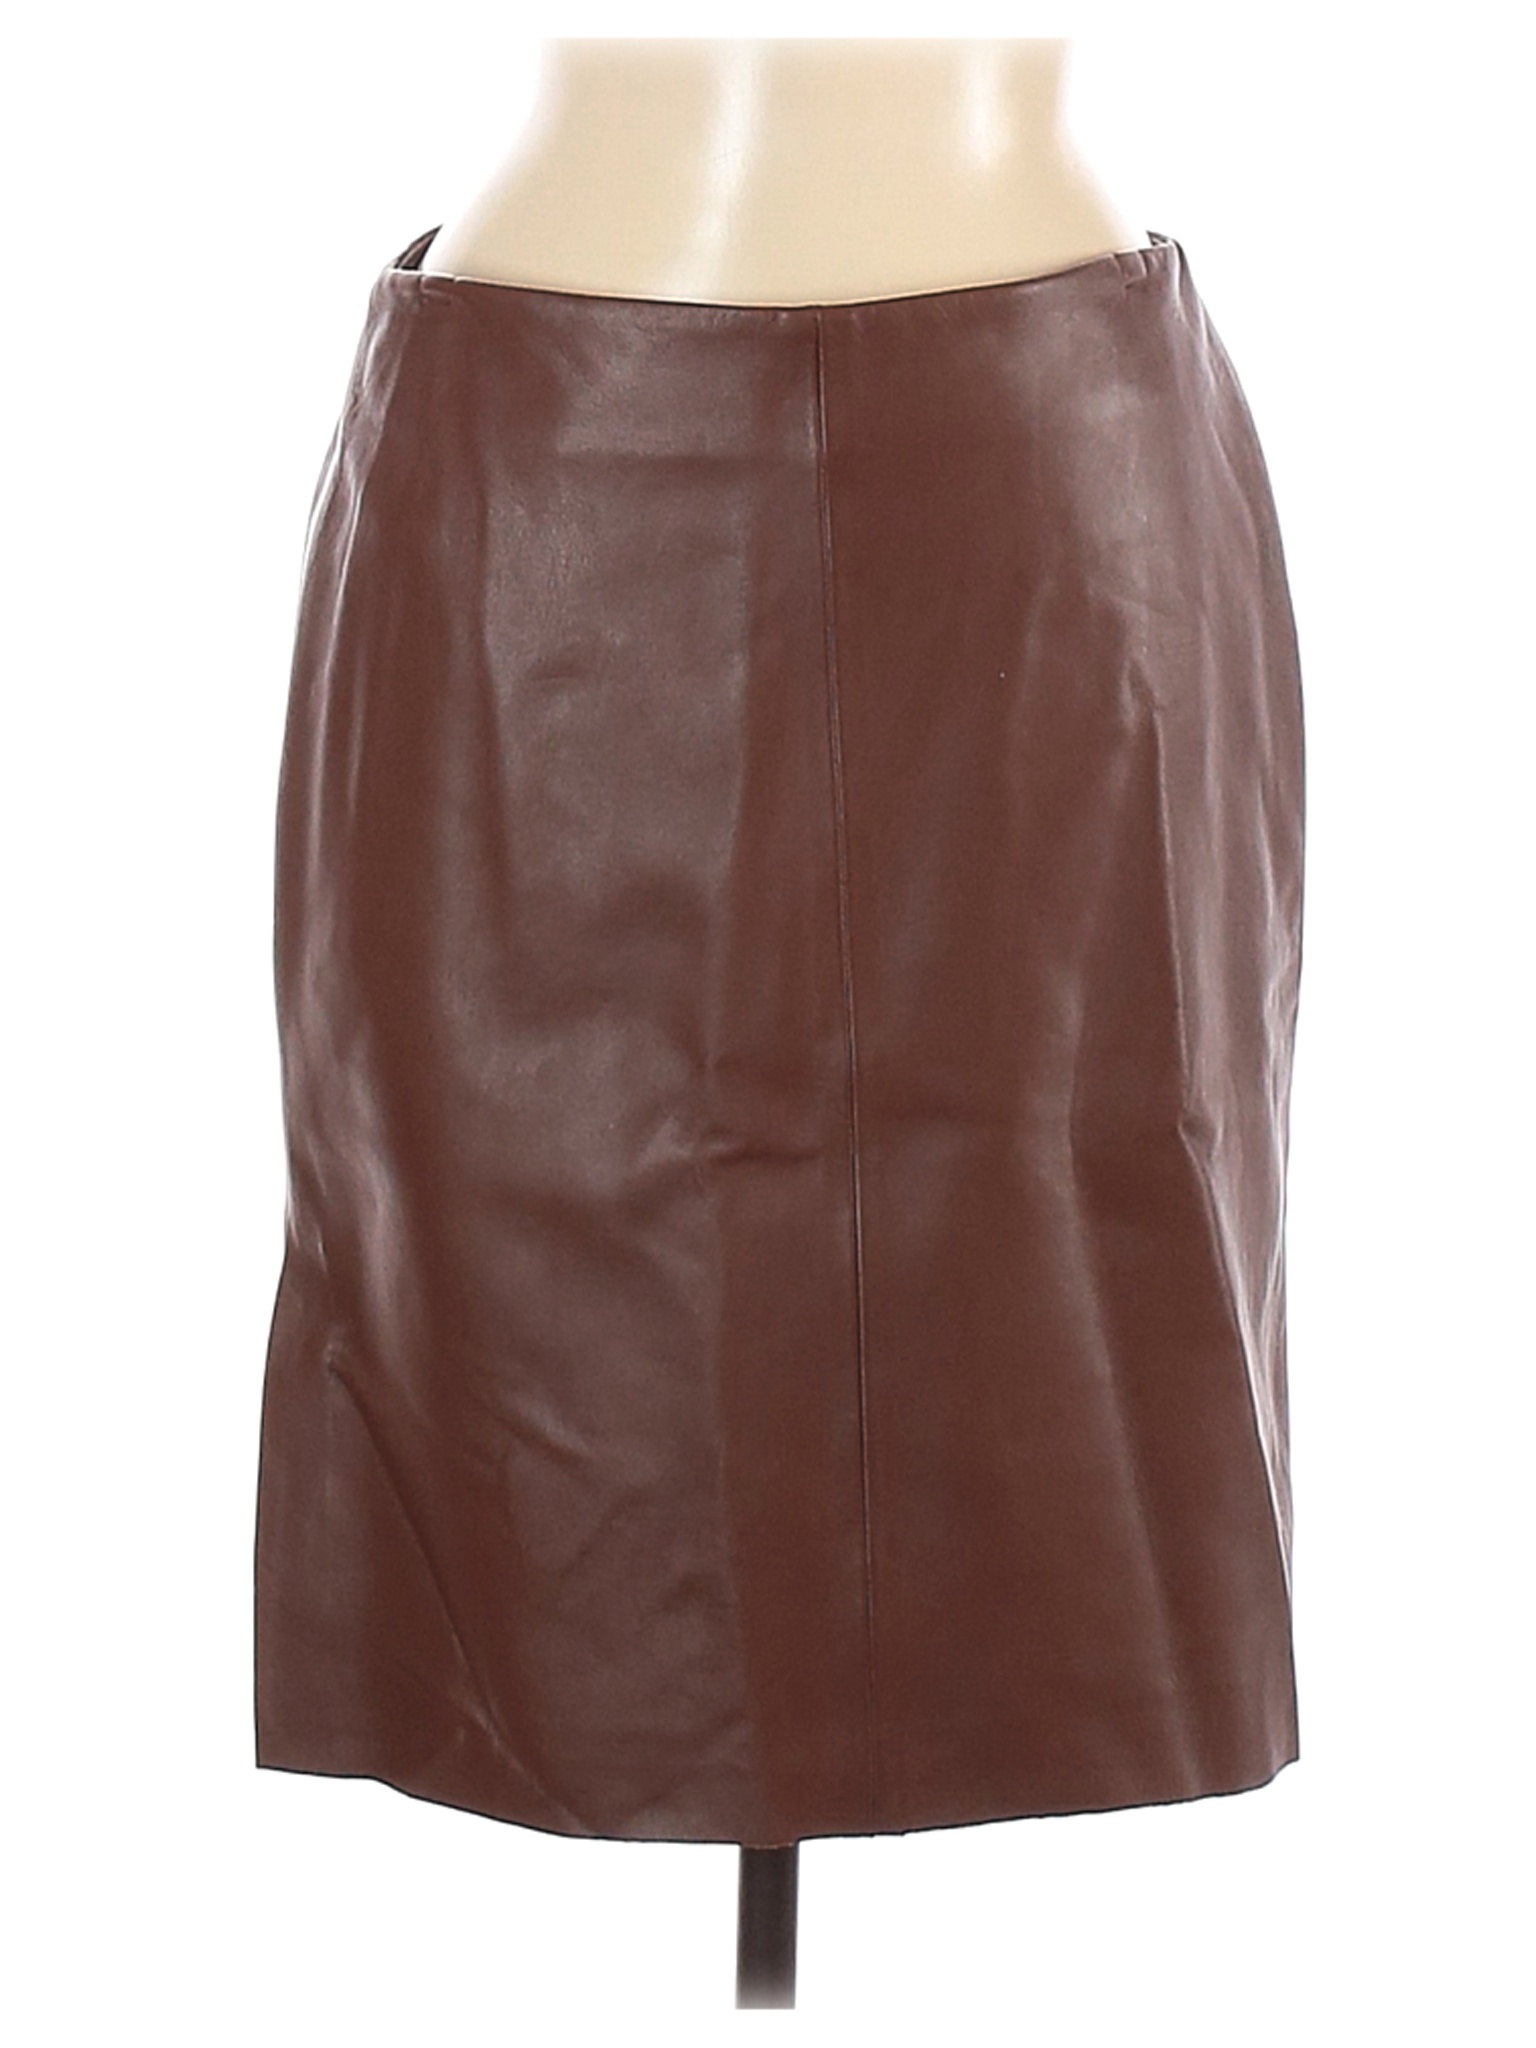 NWT Identify Women Brown Leather Skirt 10 | eBay